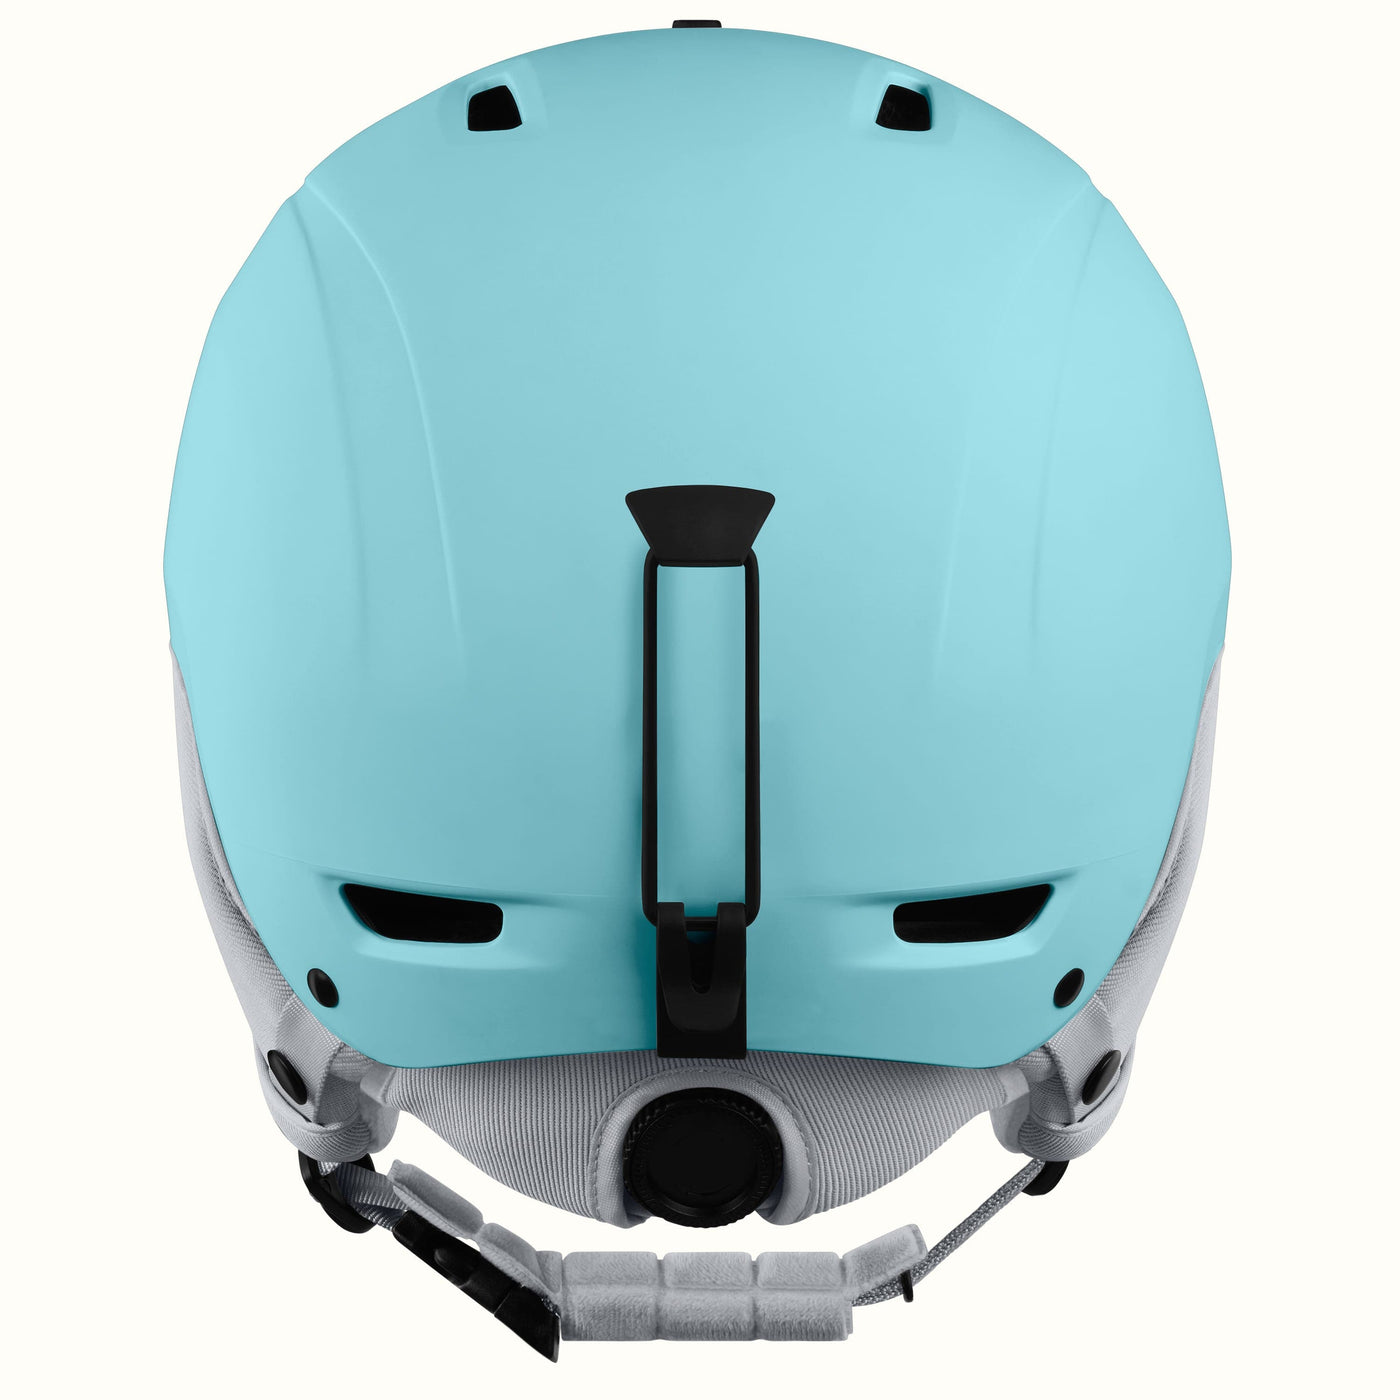 Zephyr Ski & Snowboard Helmet | Matte Blue Ridge